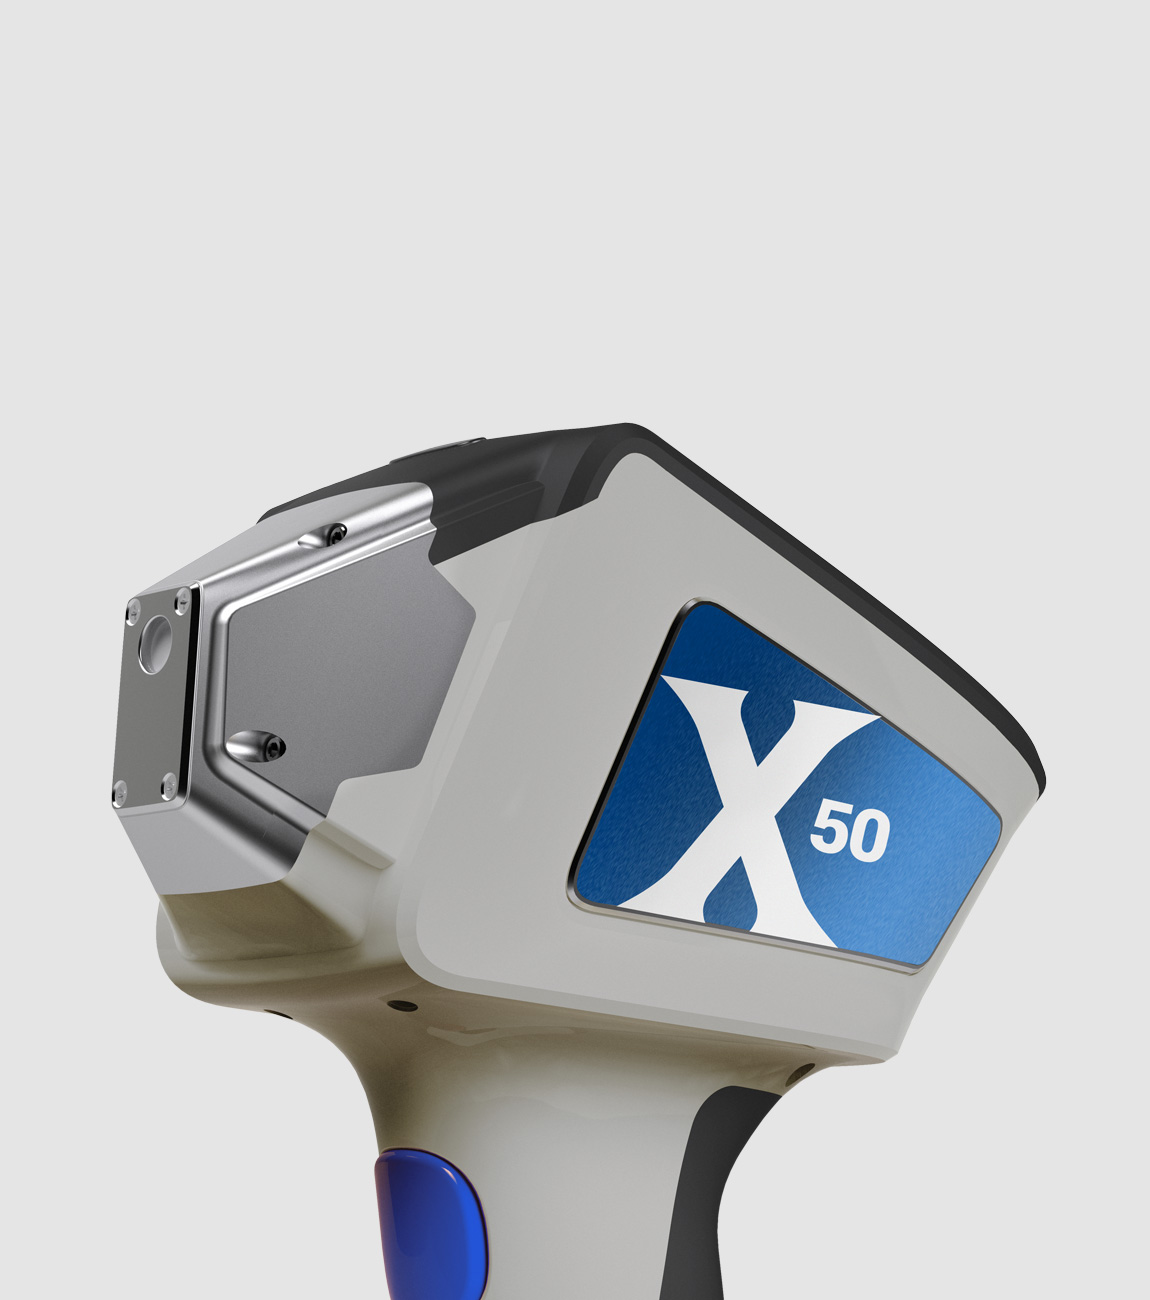 X-50 z detektorem typu PiN